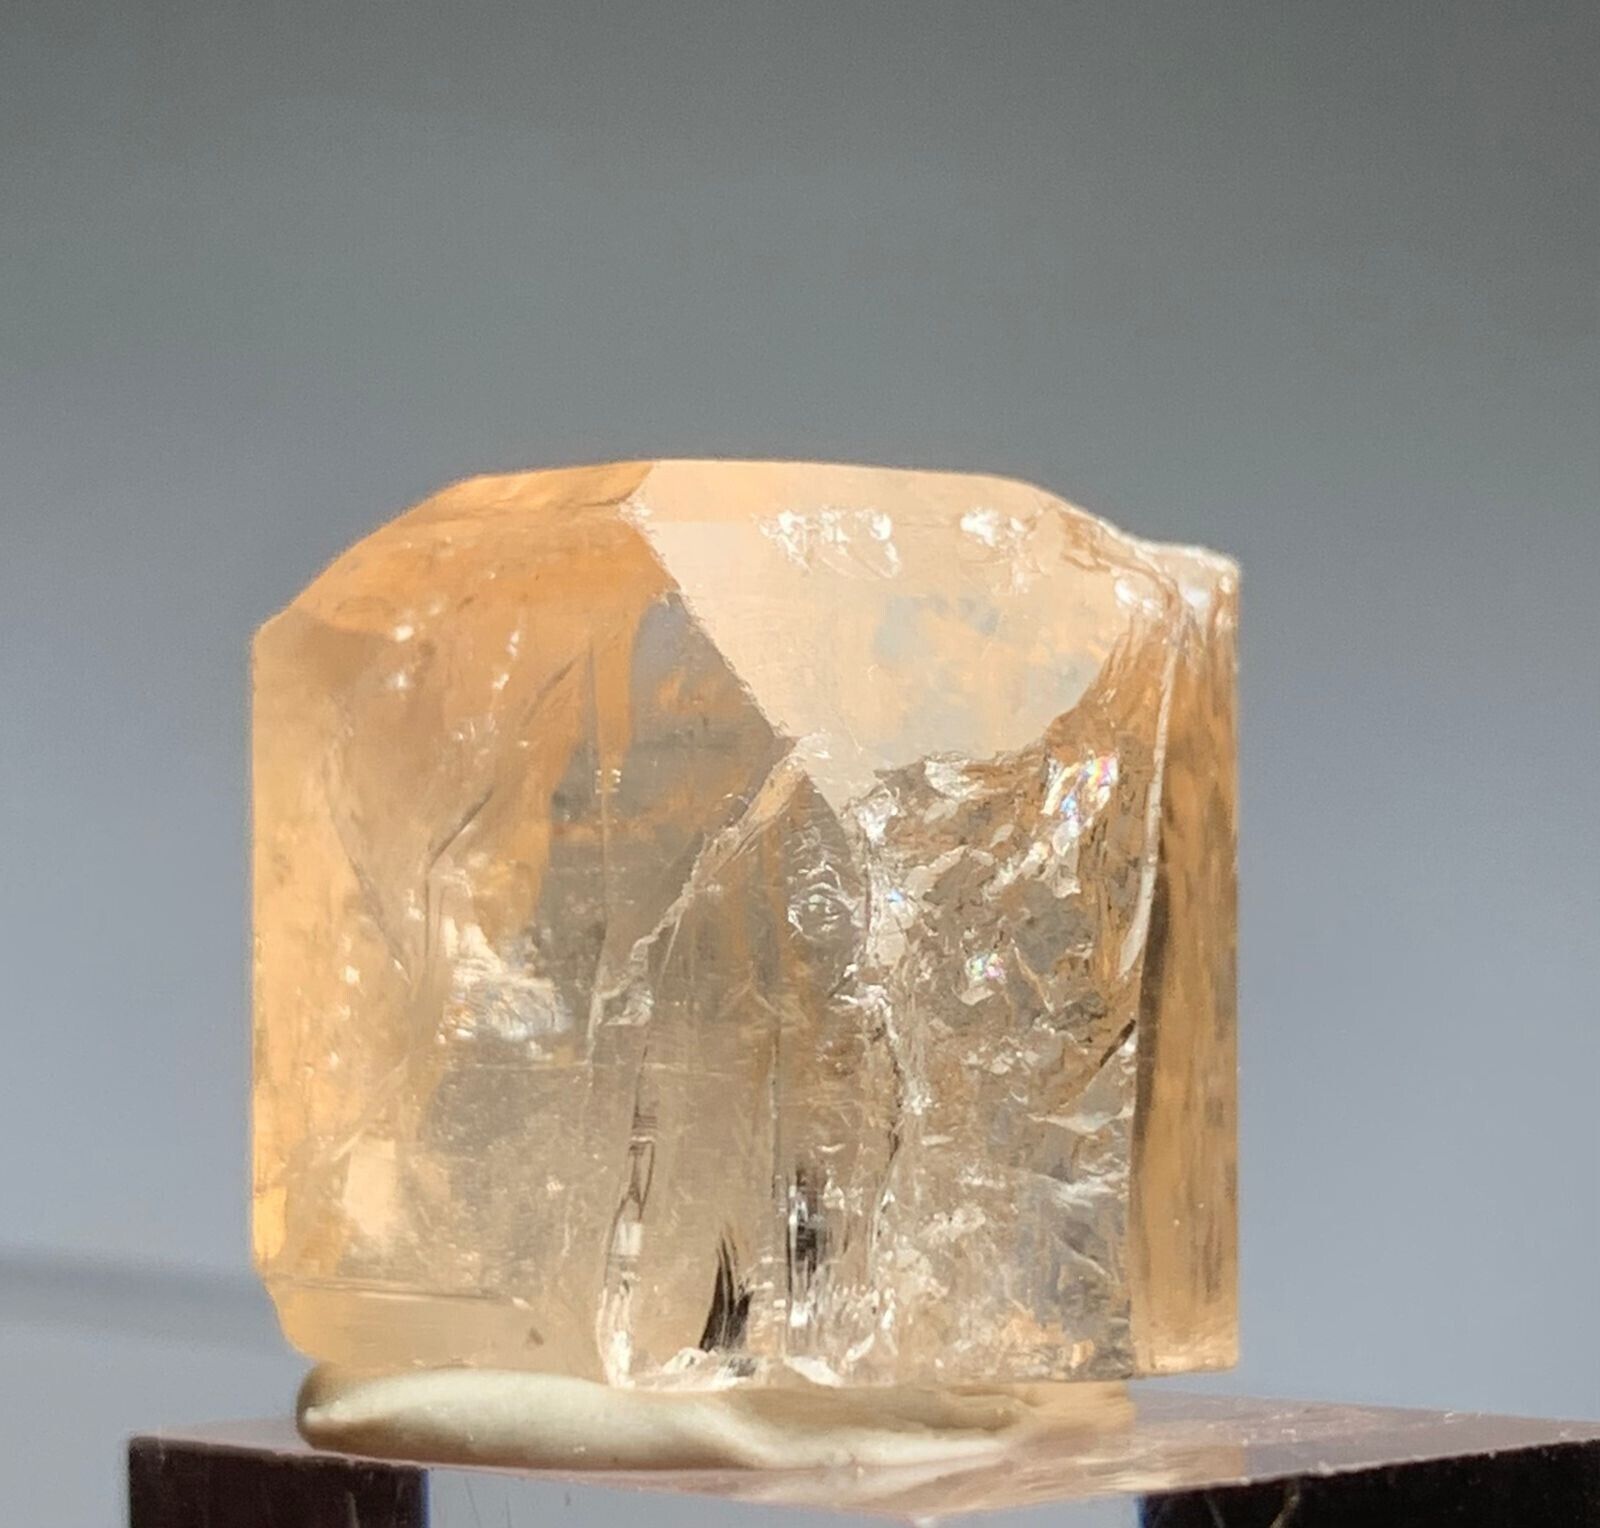 90 Carats Topaz Crystal from Pakistan